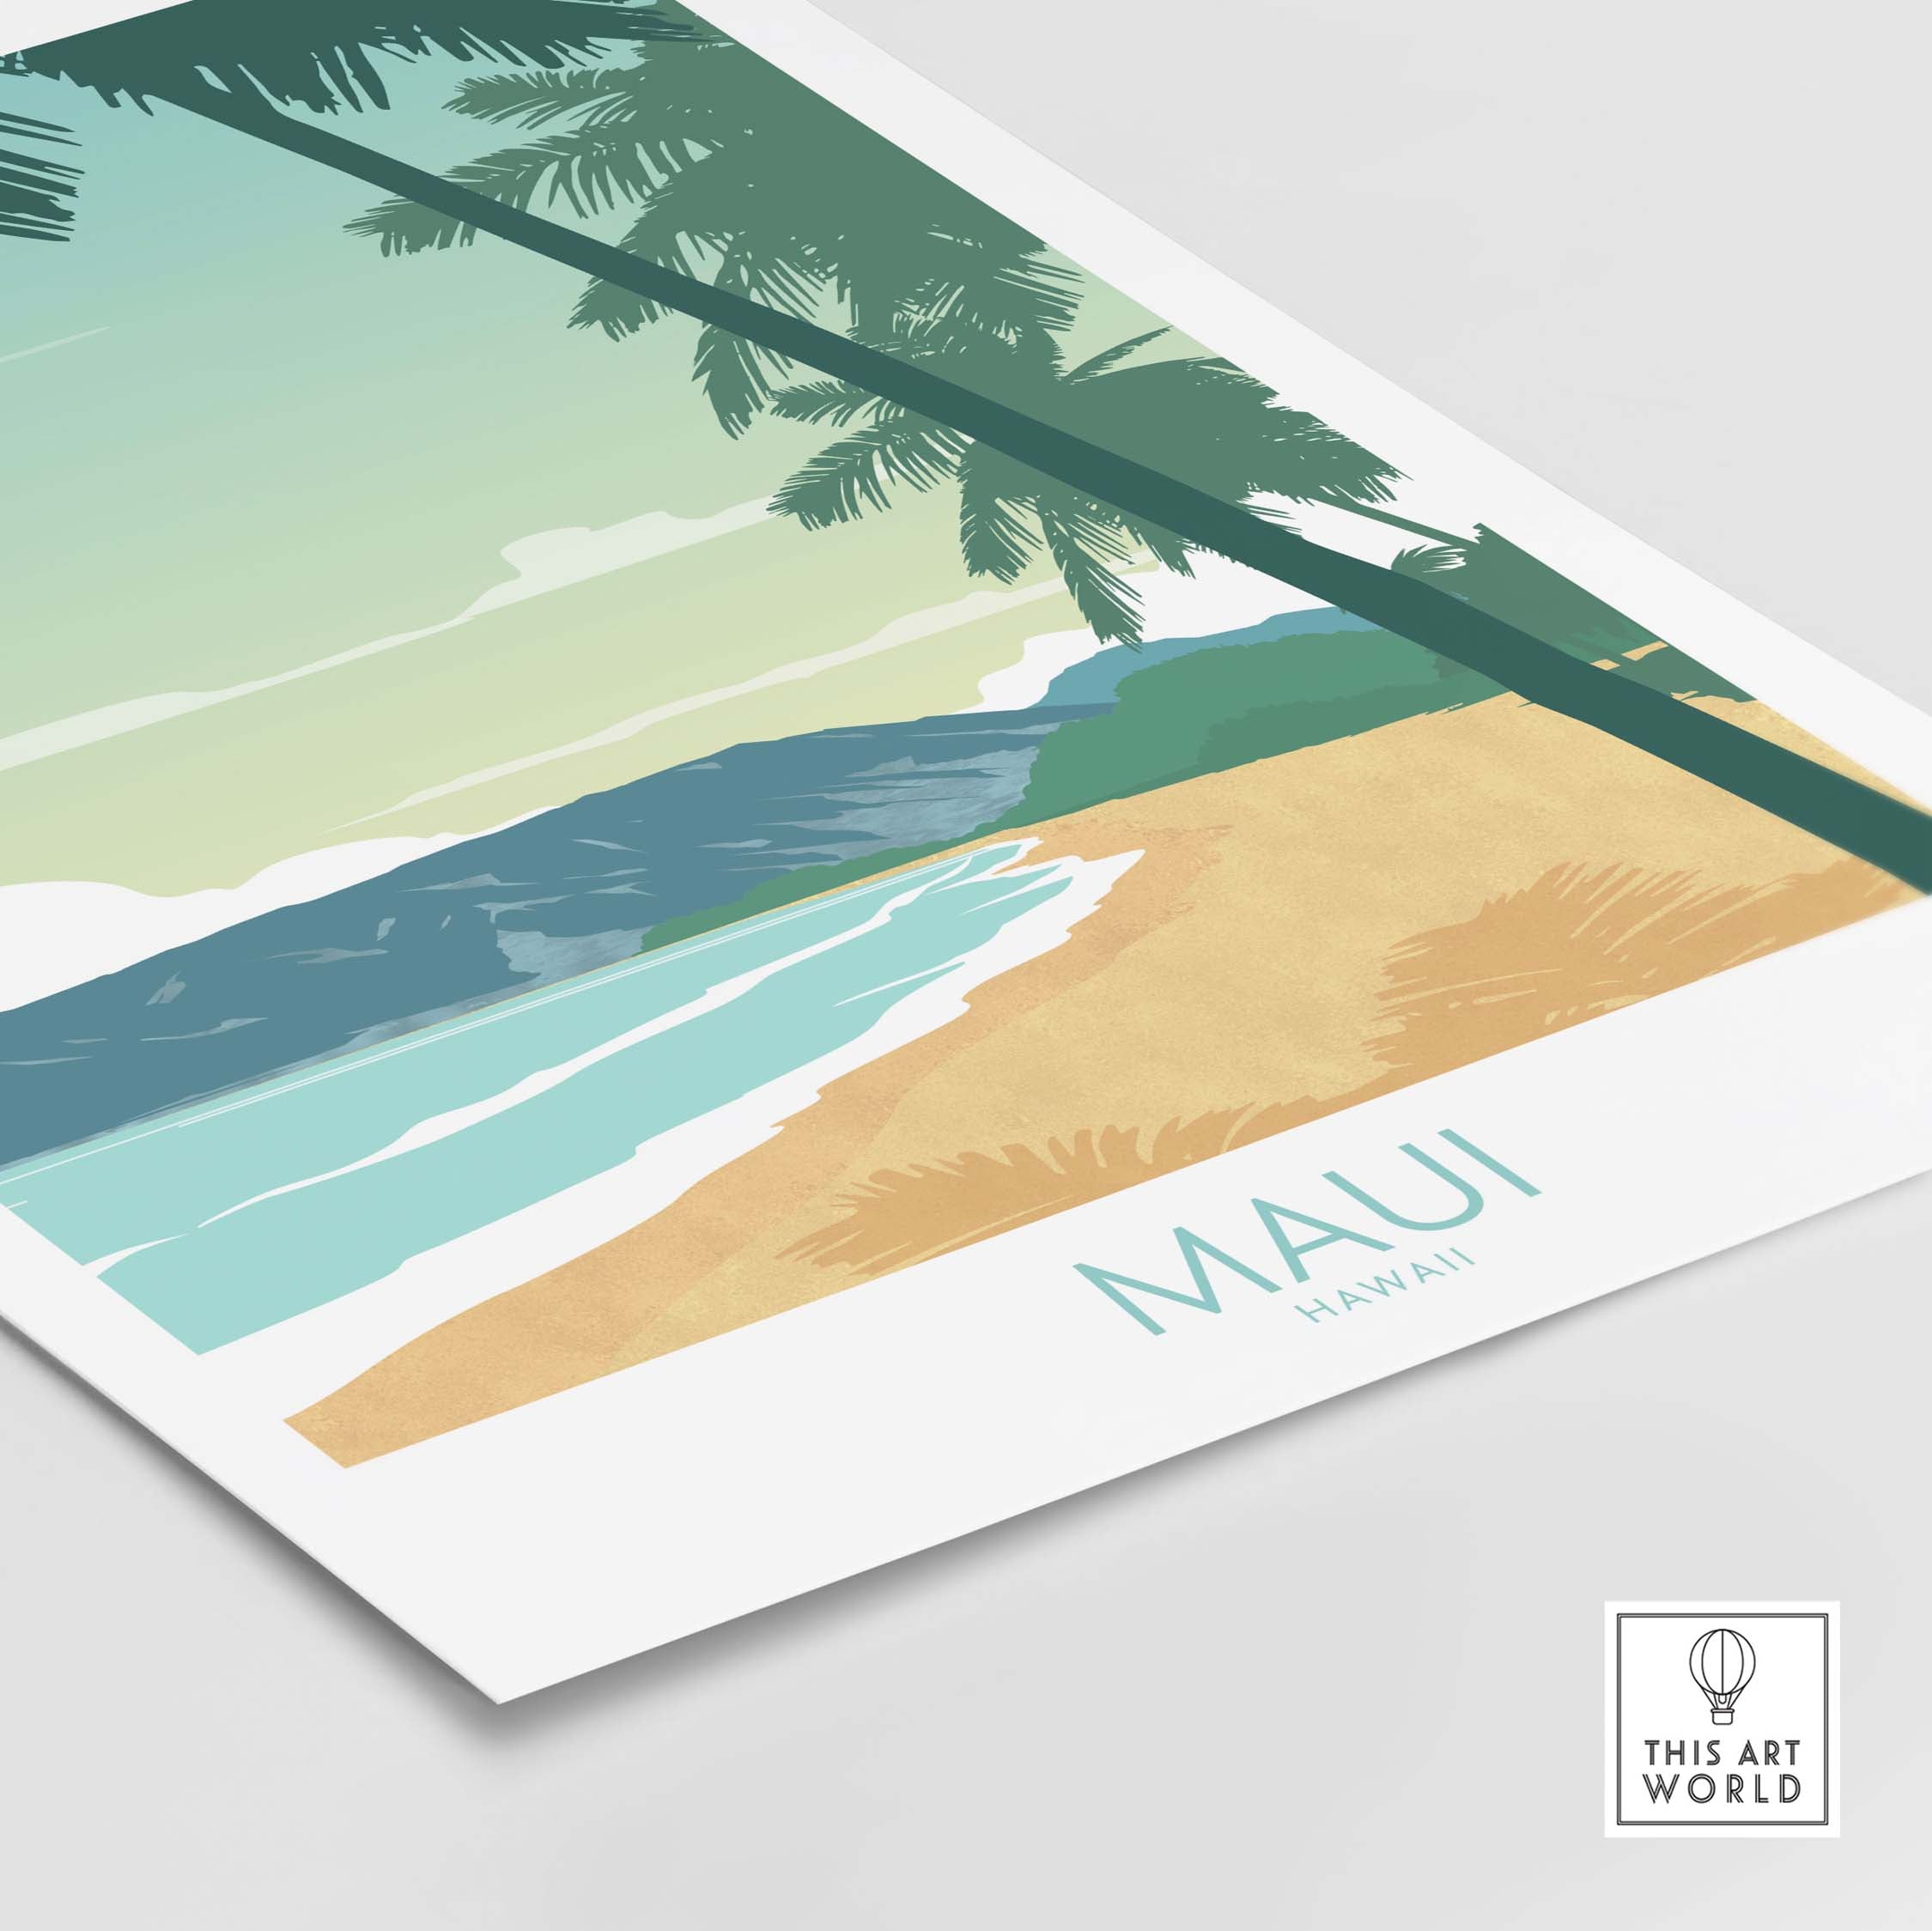 maui print hawaii poster